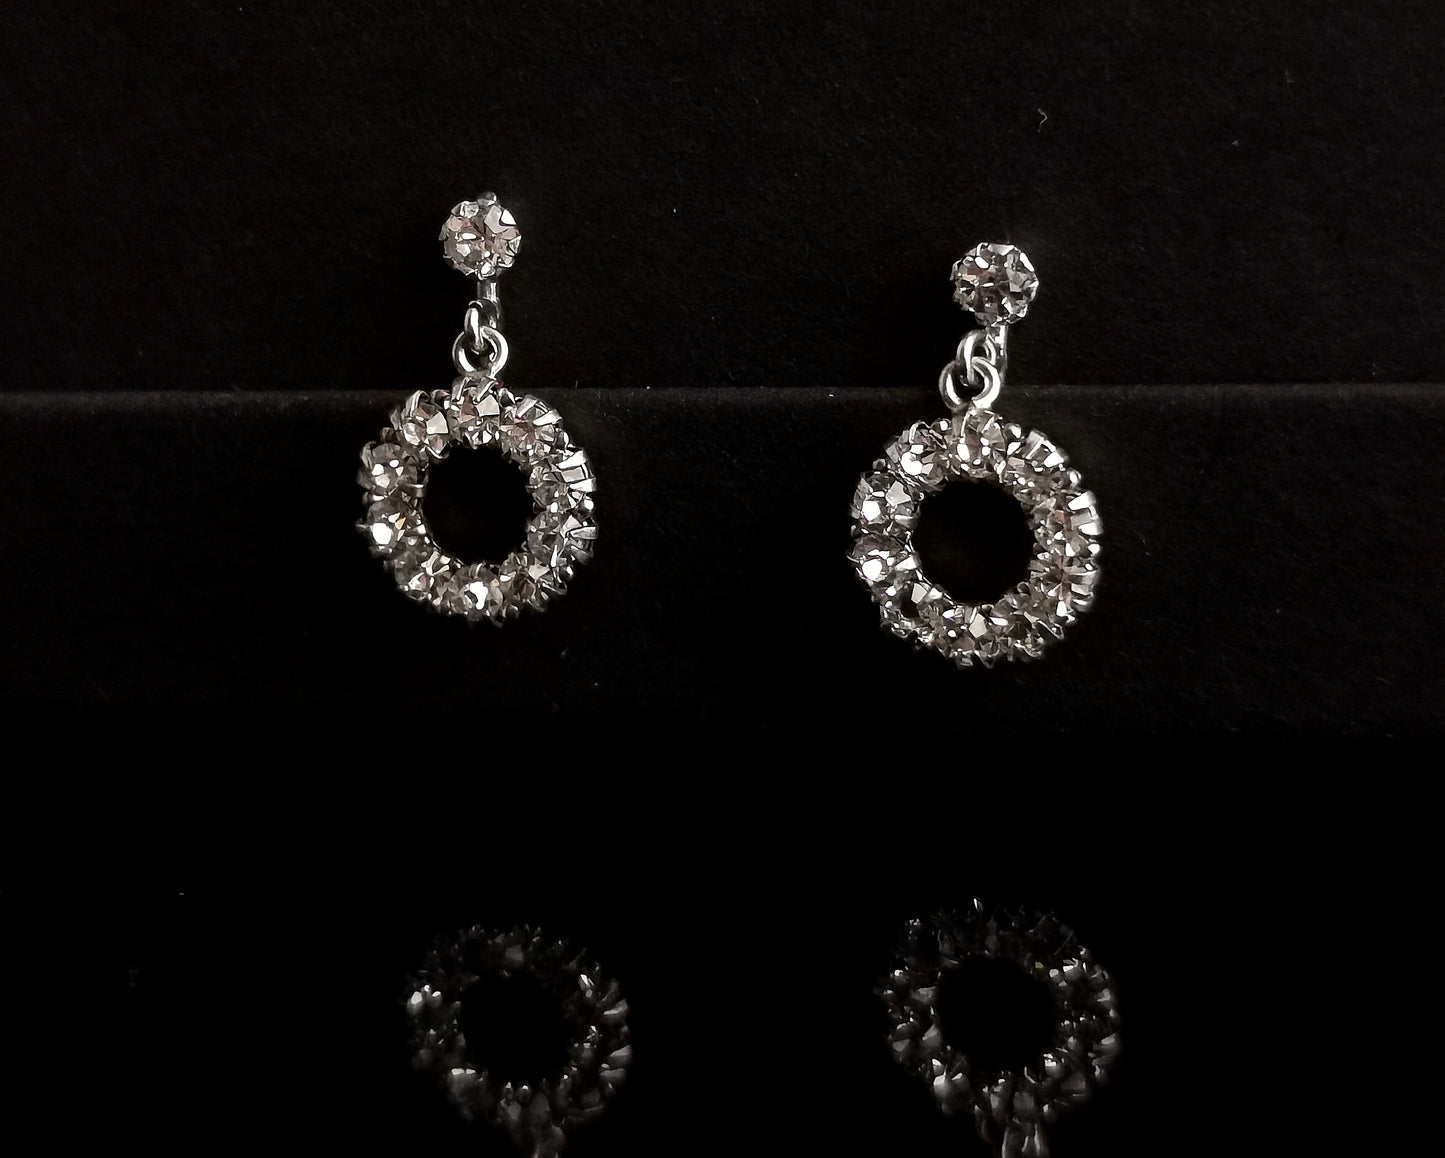 Vintage Art Deco paste drop earrings, dangly silver